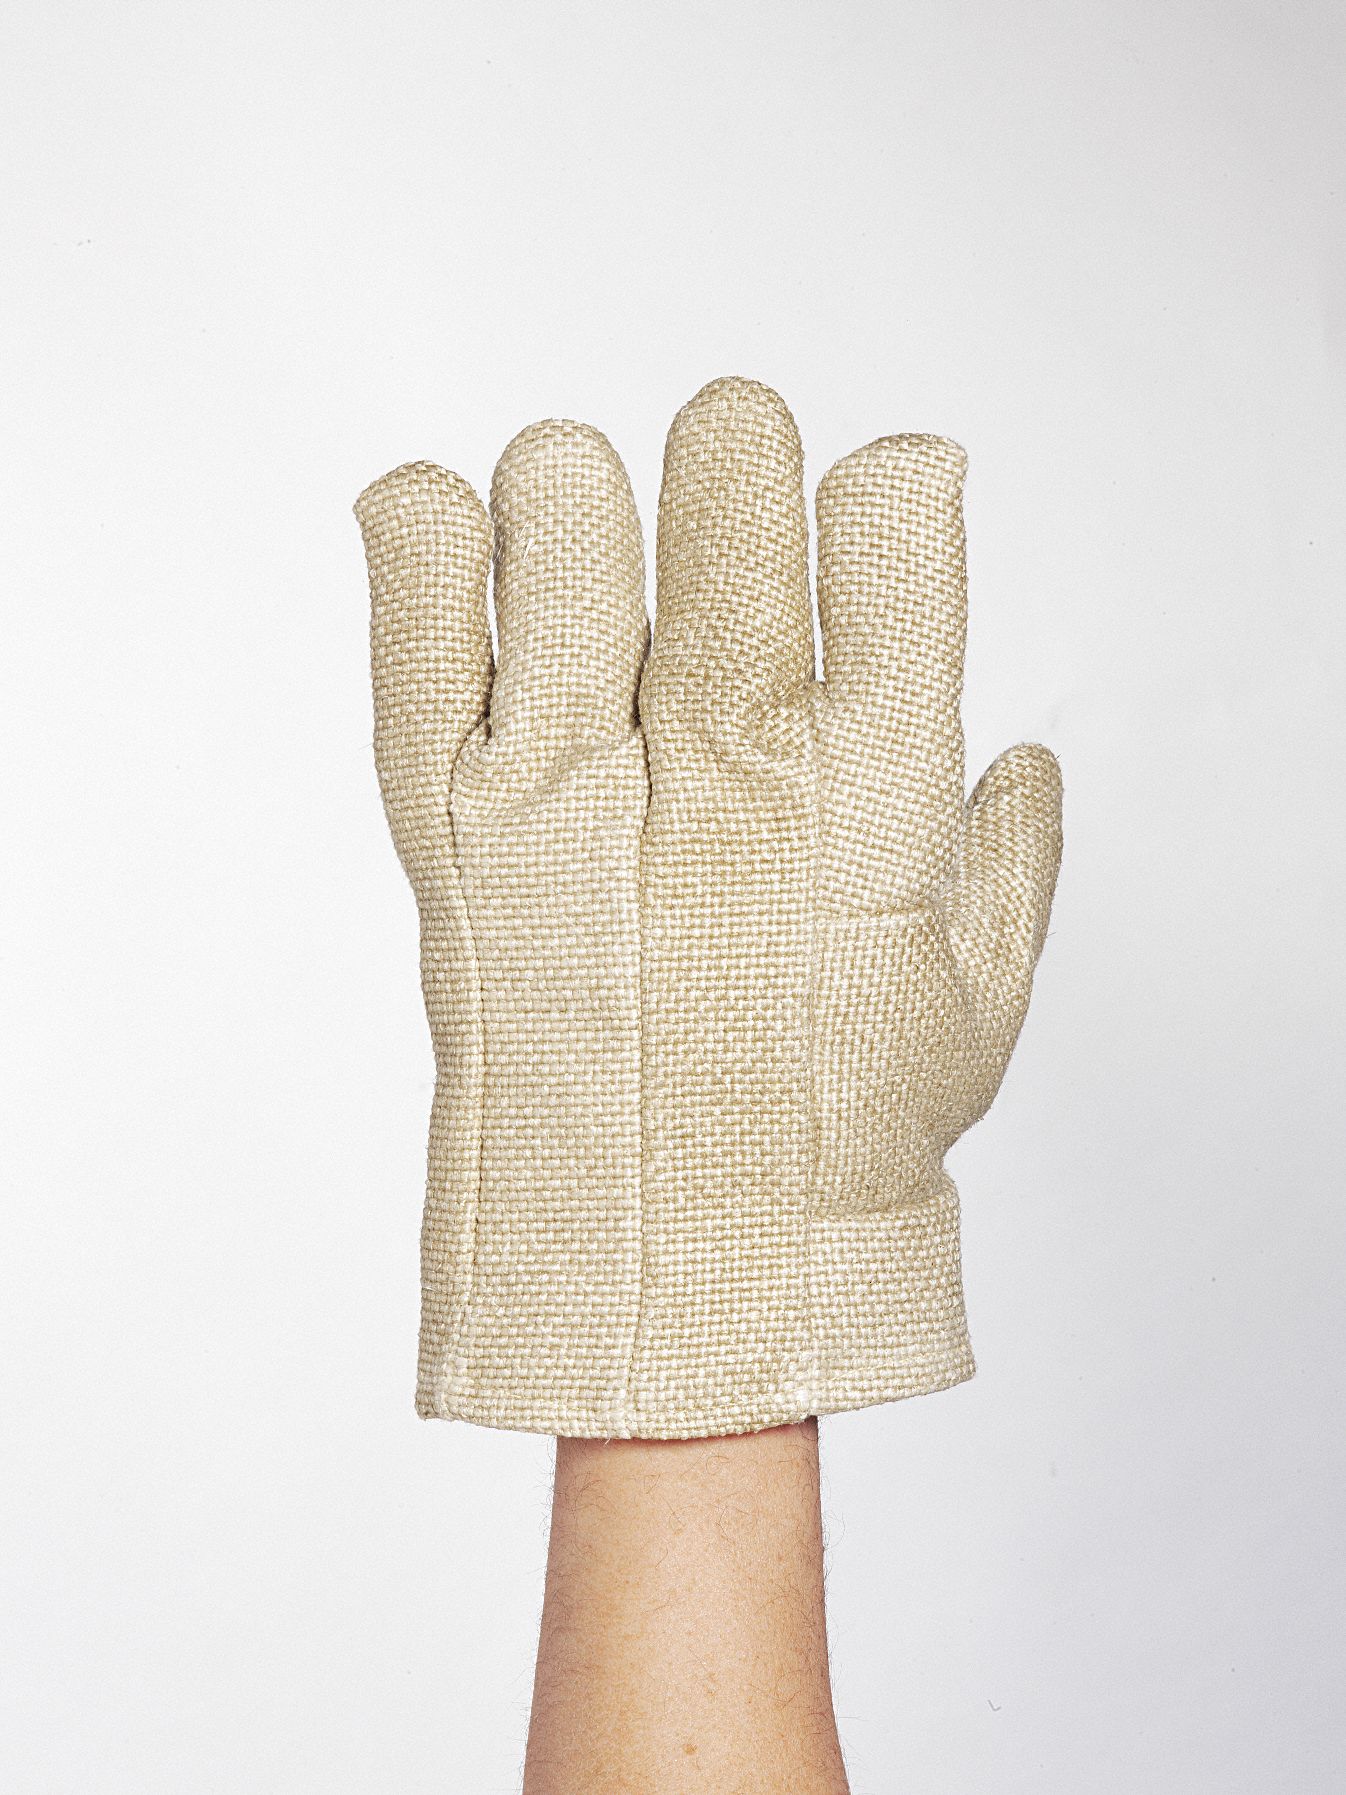 Knit Gloves: Universal, Glove Hand Protection, ANSI Abrasion Level 3, ZetexPlus, 1 PR